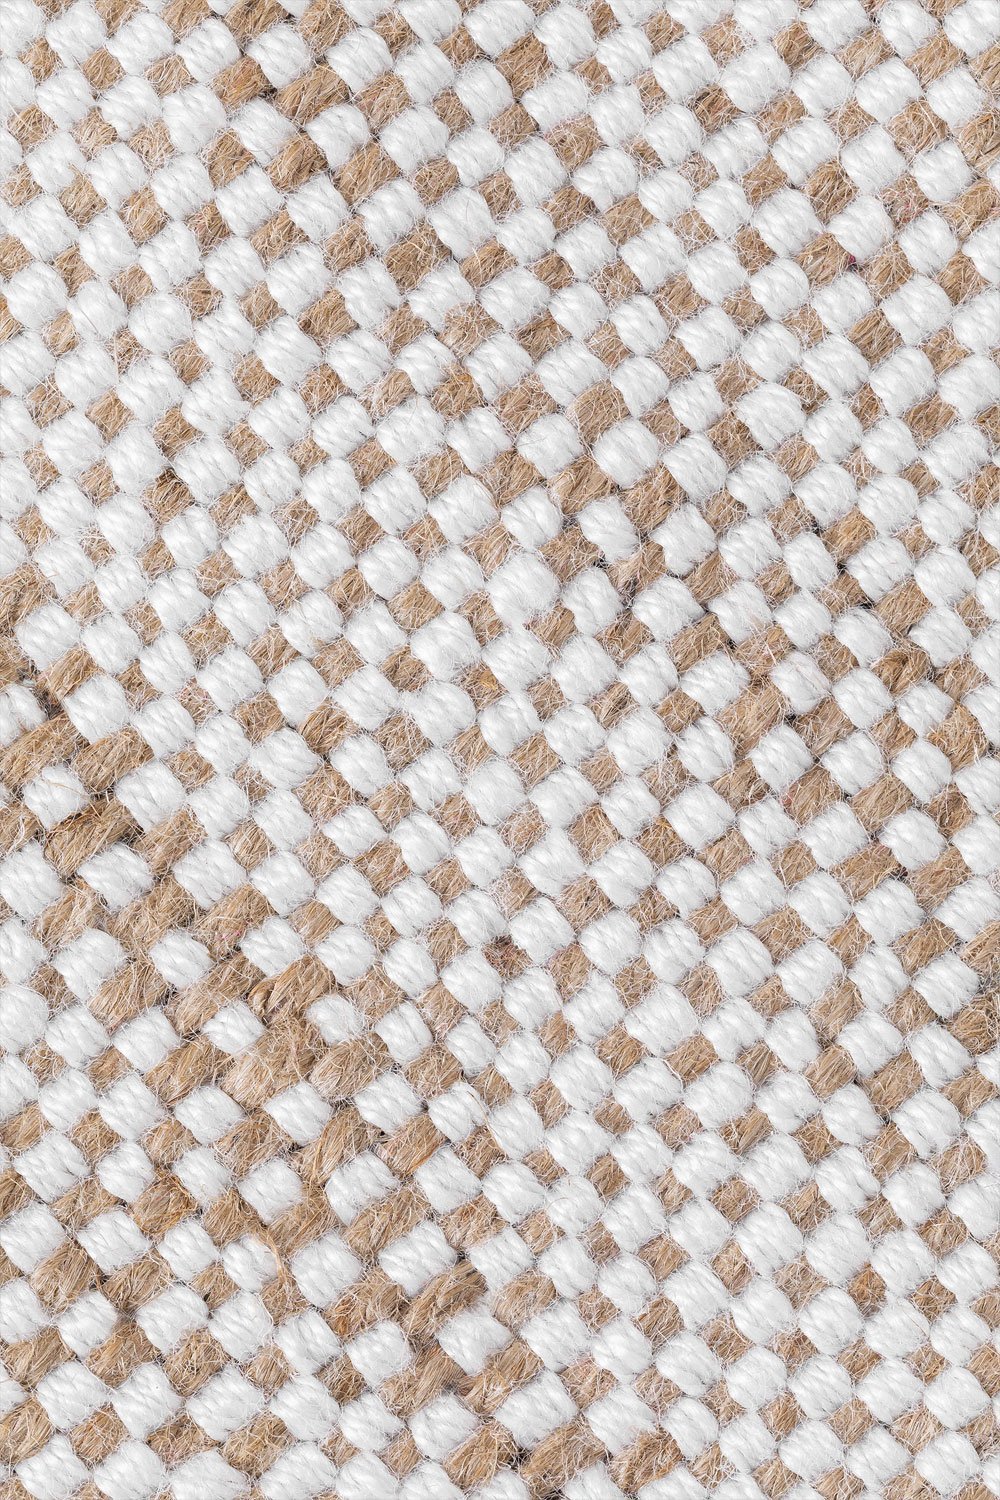 Tappeto in juta e cotone (230x160 cm) Mireyla - SKLUM